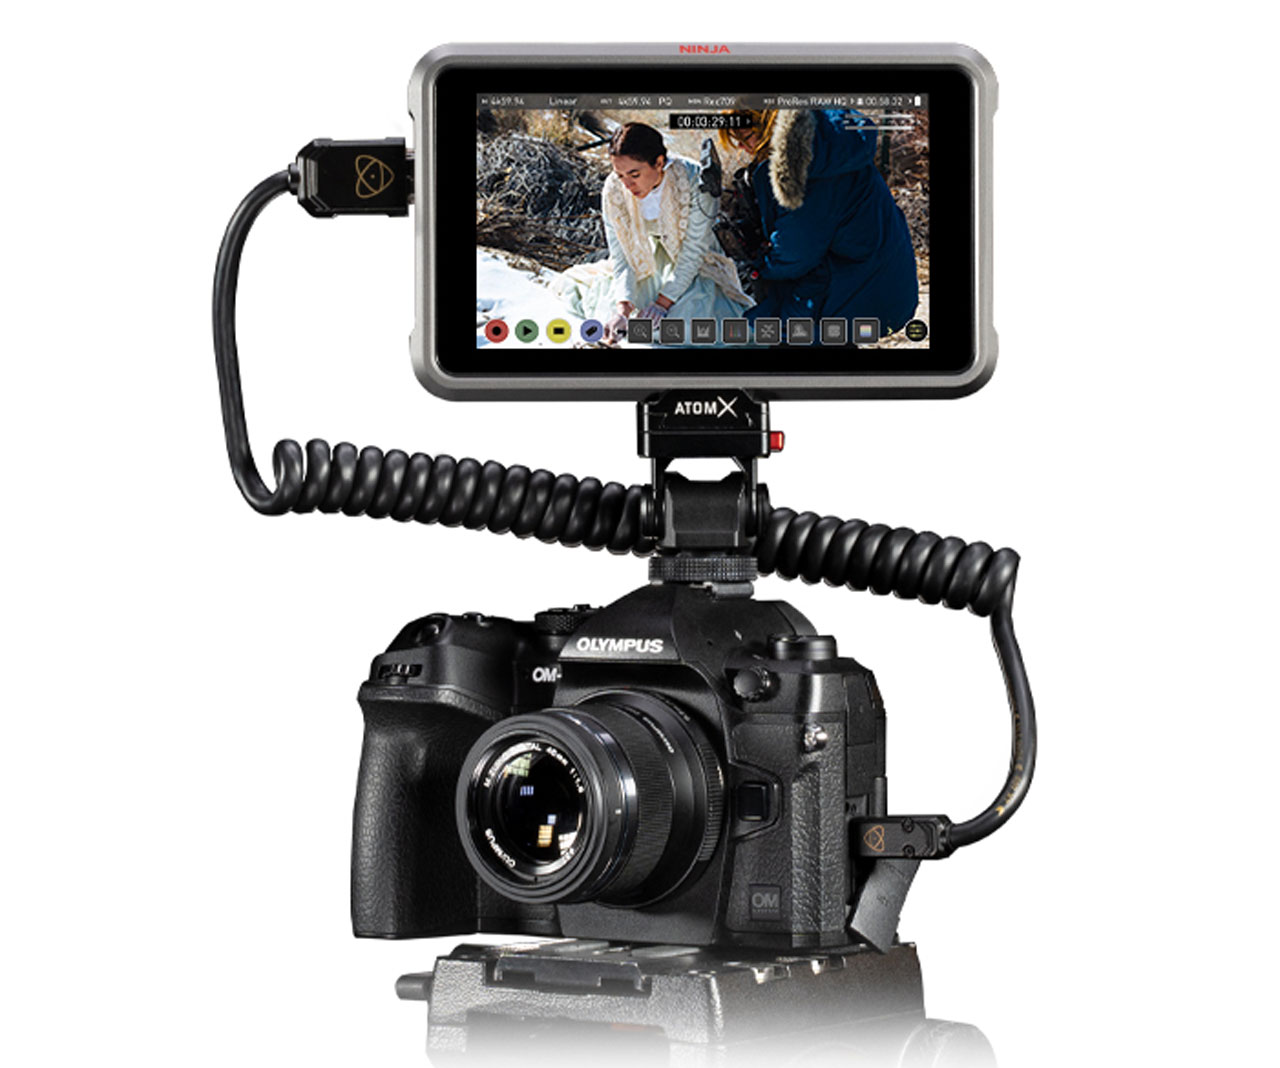 OM SYSTEM OM-1 Camera Released - 4K60 10-Bit Internal Video, 12 